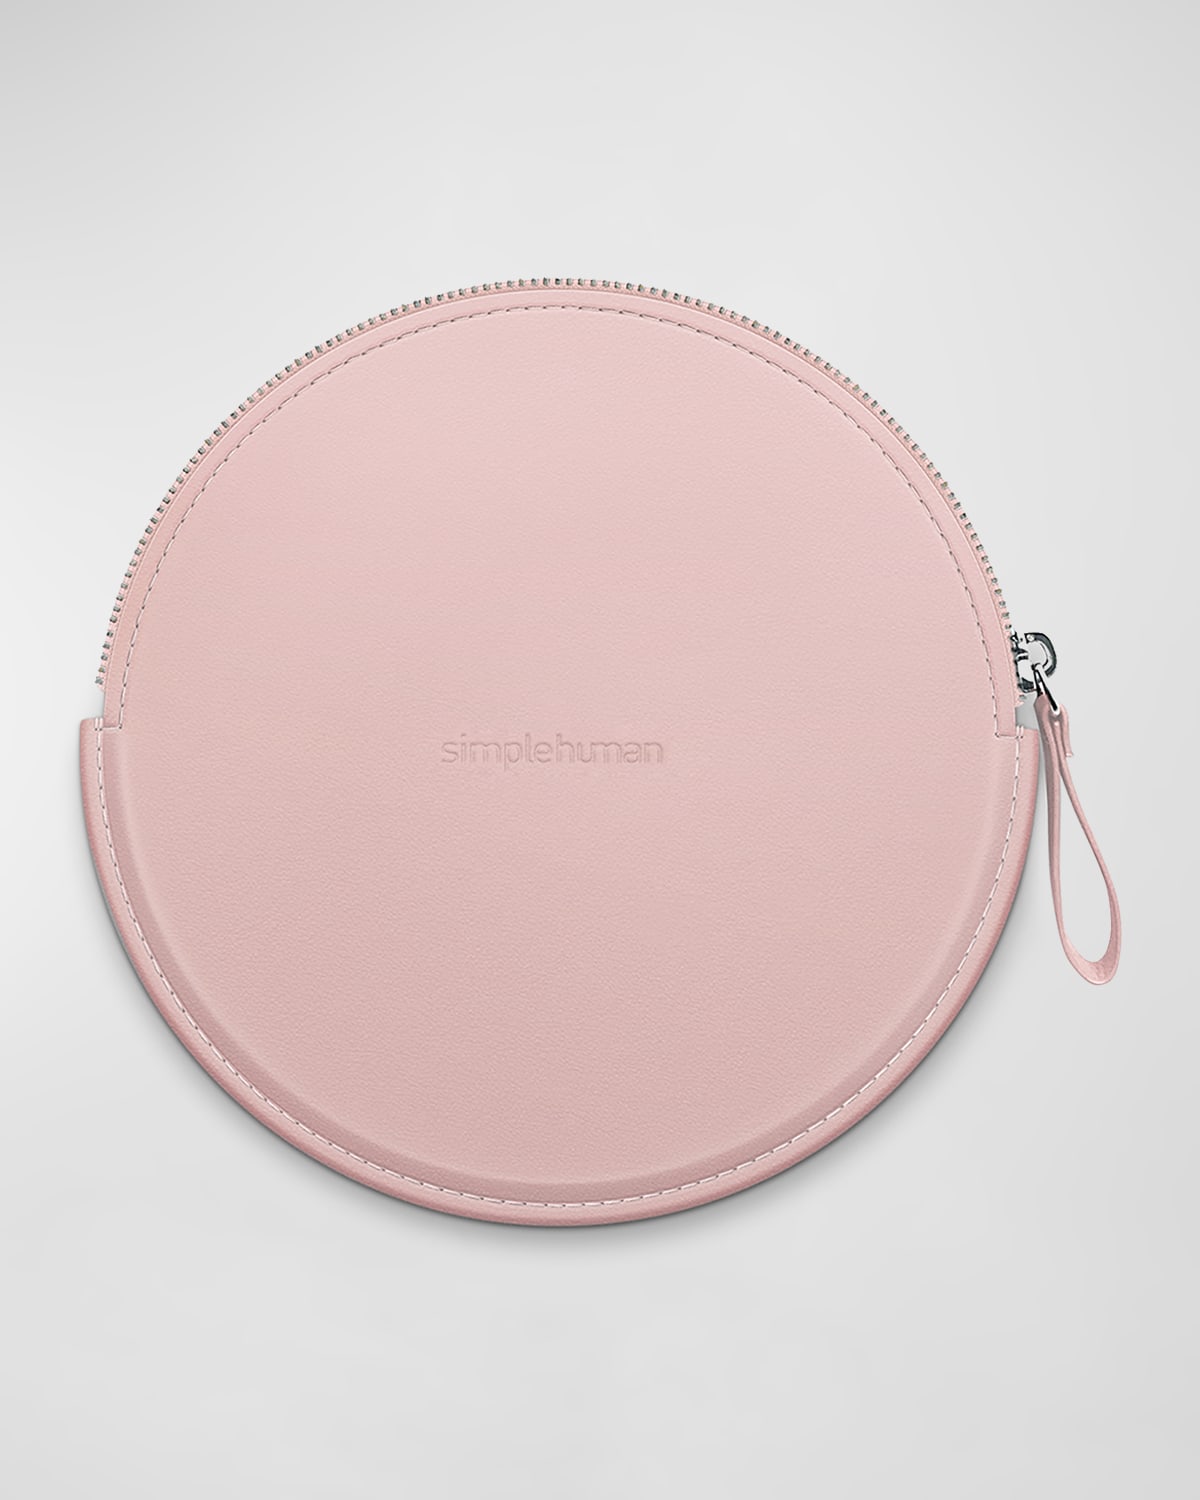 Simplehuman Sensor Mirror Compact Case In Pink